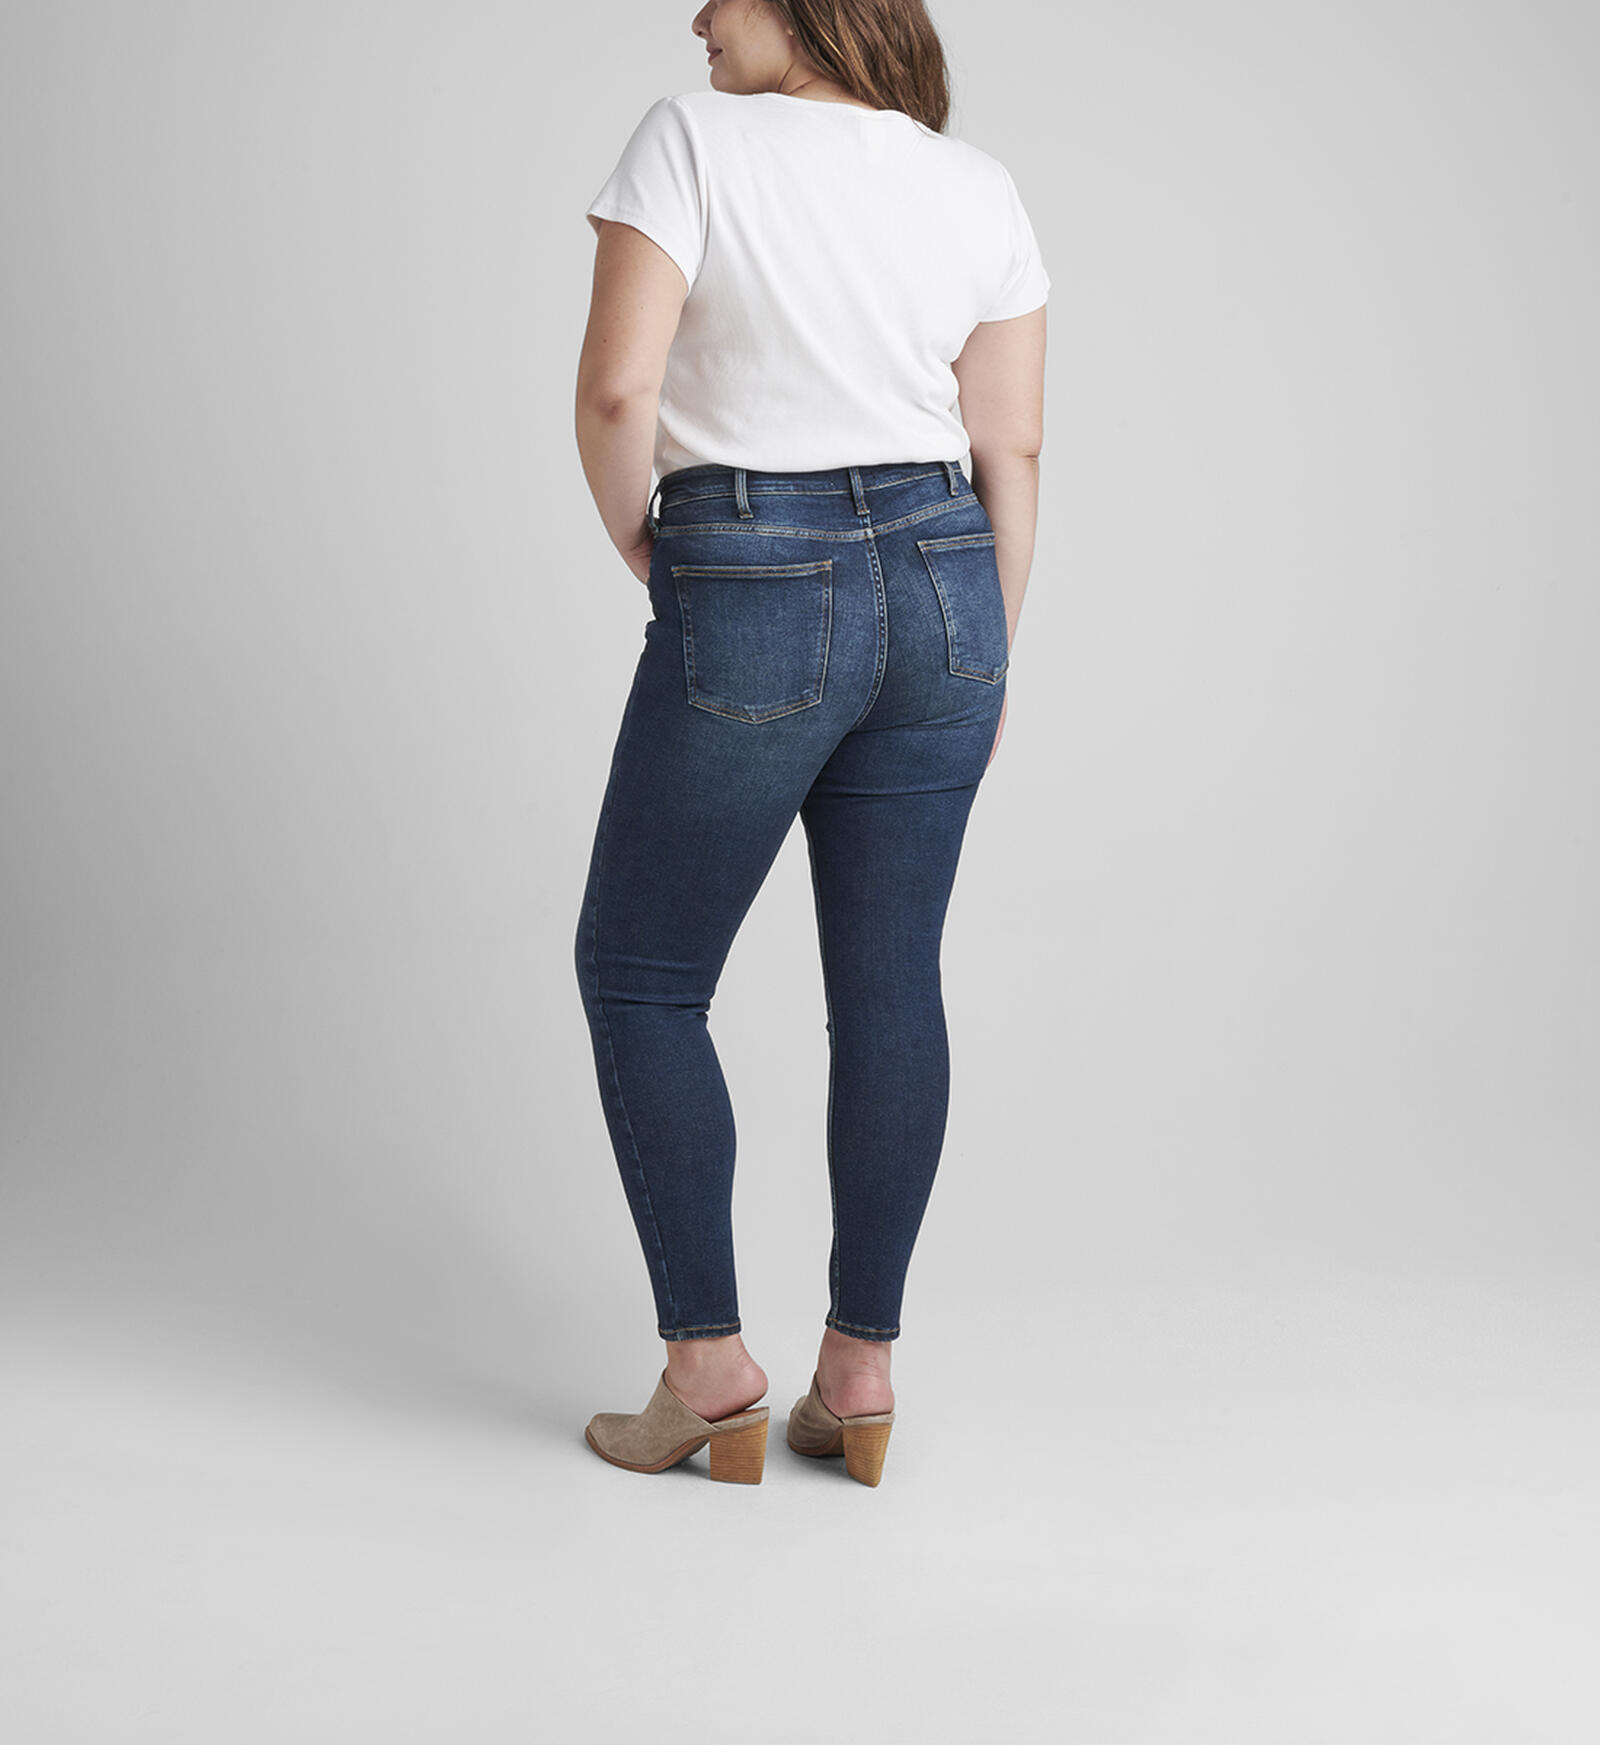 Essentials Women's Standard Curvy Skinny Jean, Dark Wash, 0